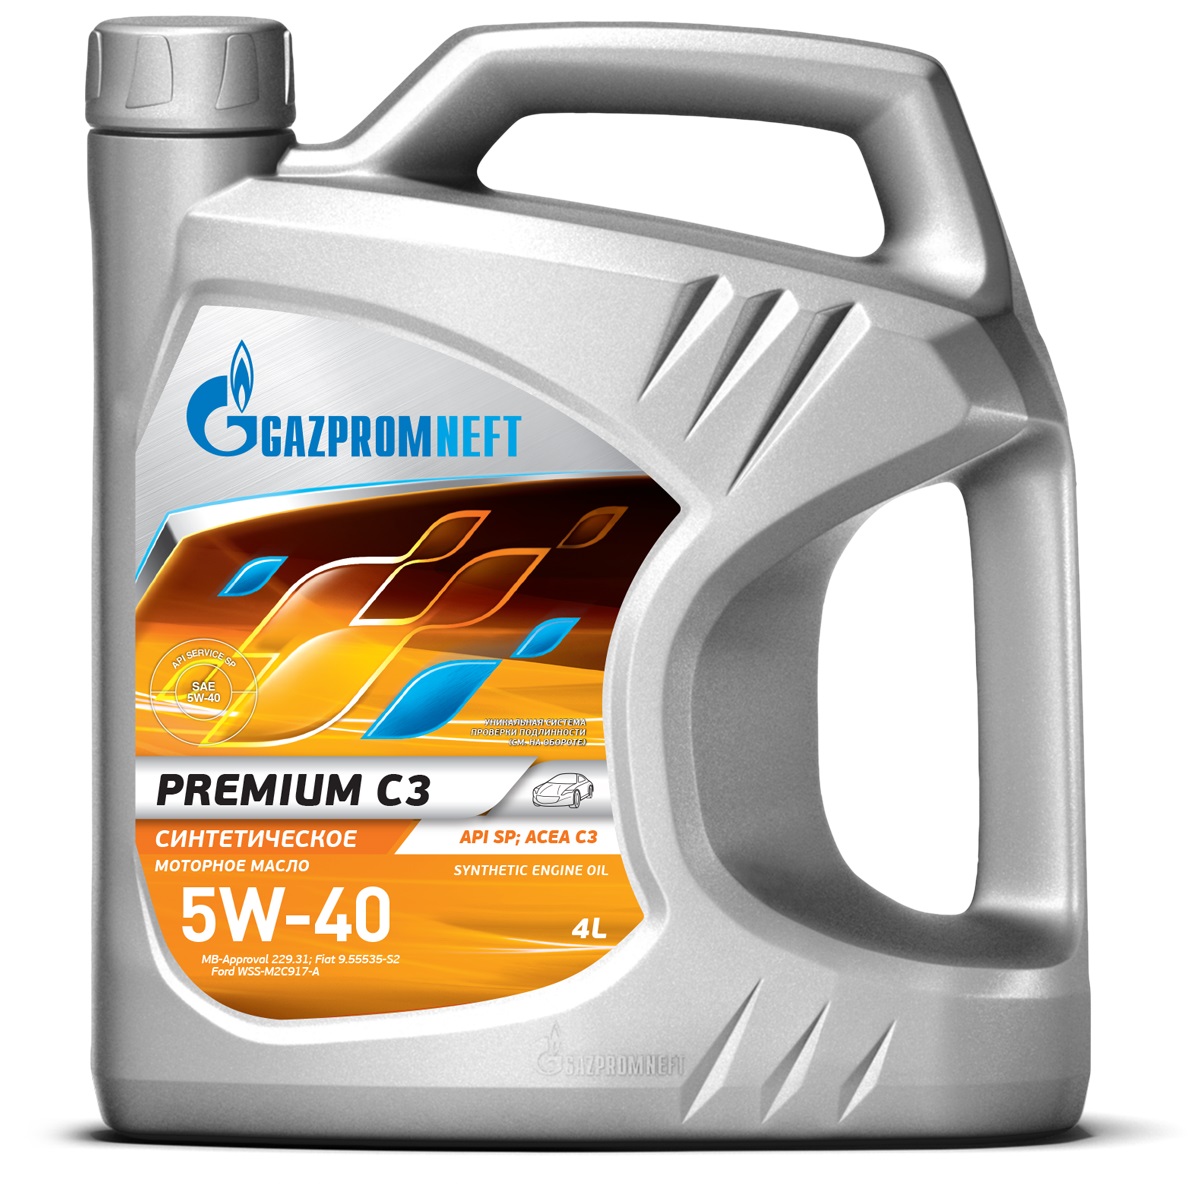 Масло моторное Gazpromneft Premium СЗ 5w40, 253142233, в канистре, 4 л